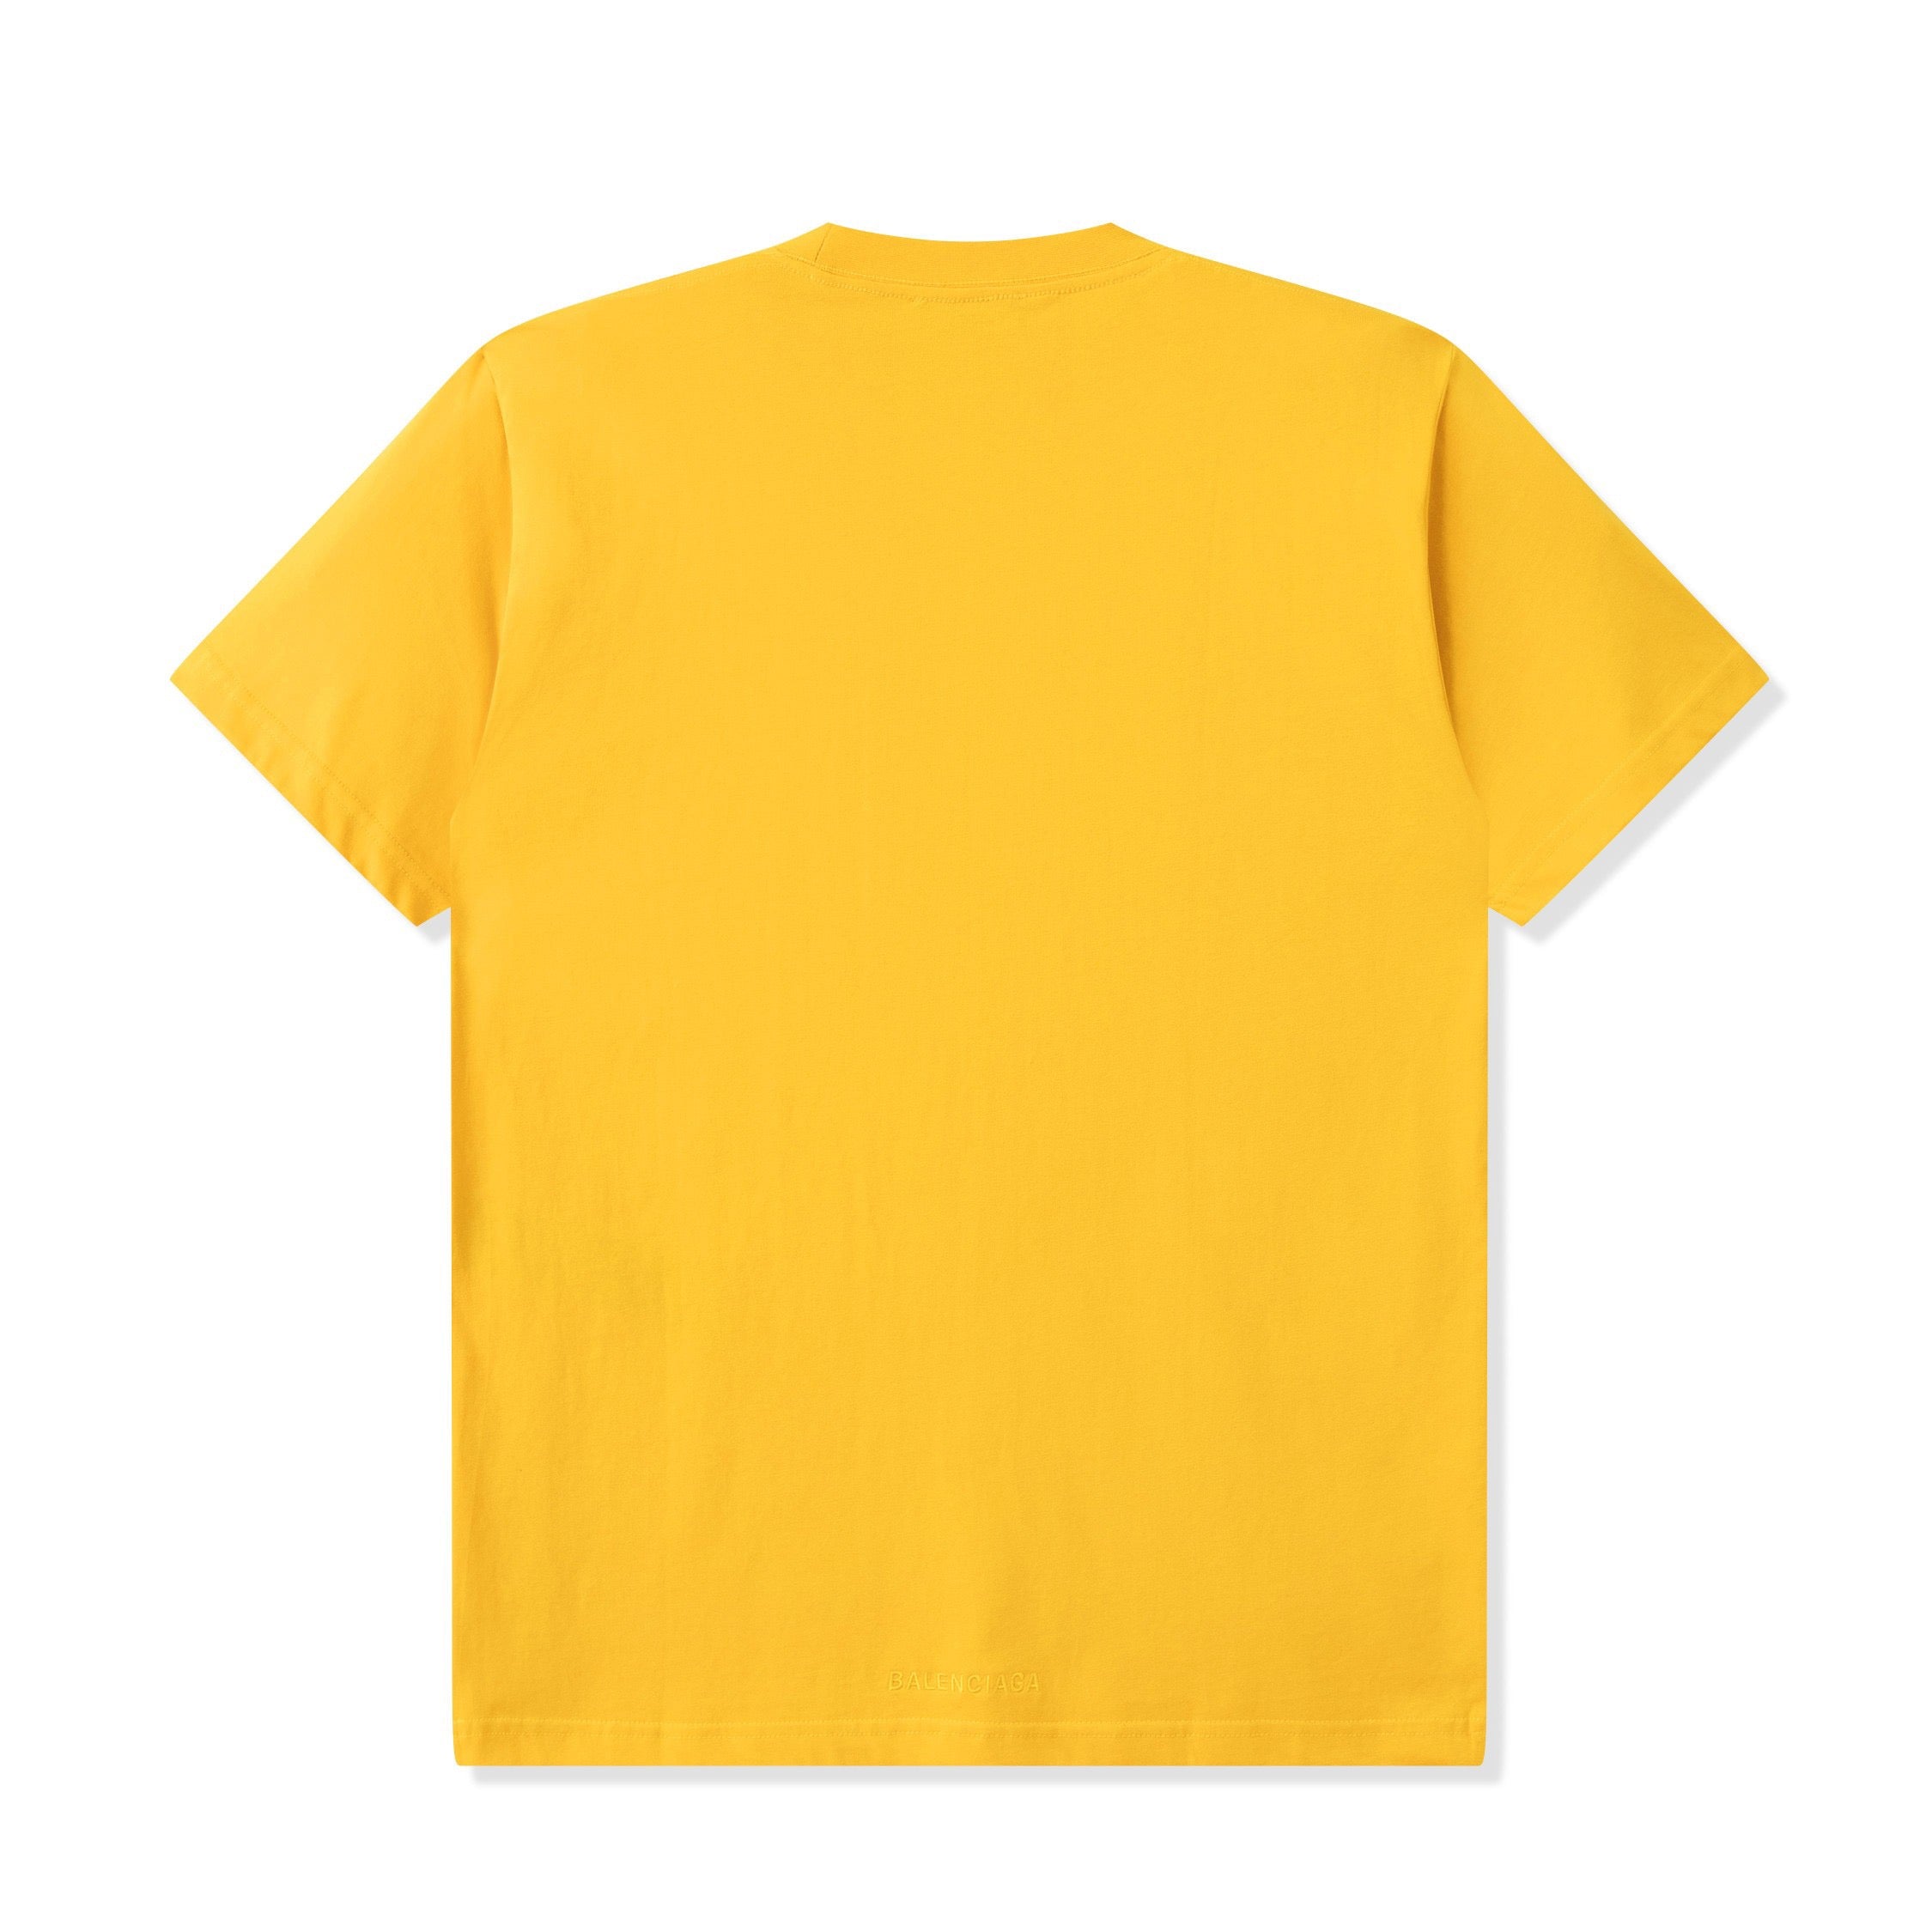 Black,White,Blue and Yellow T-shirt